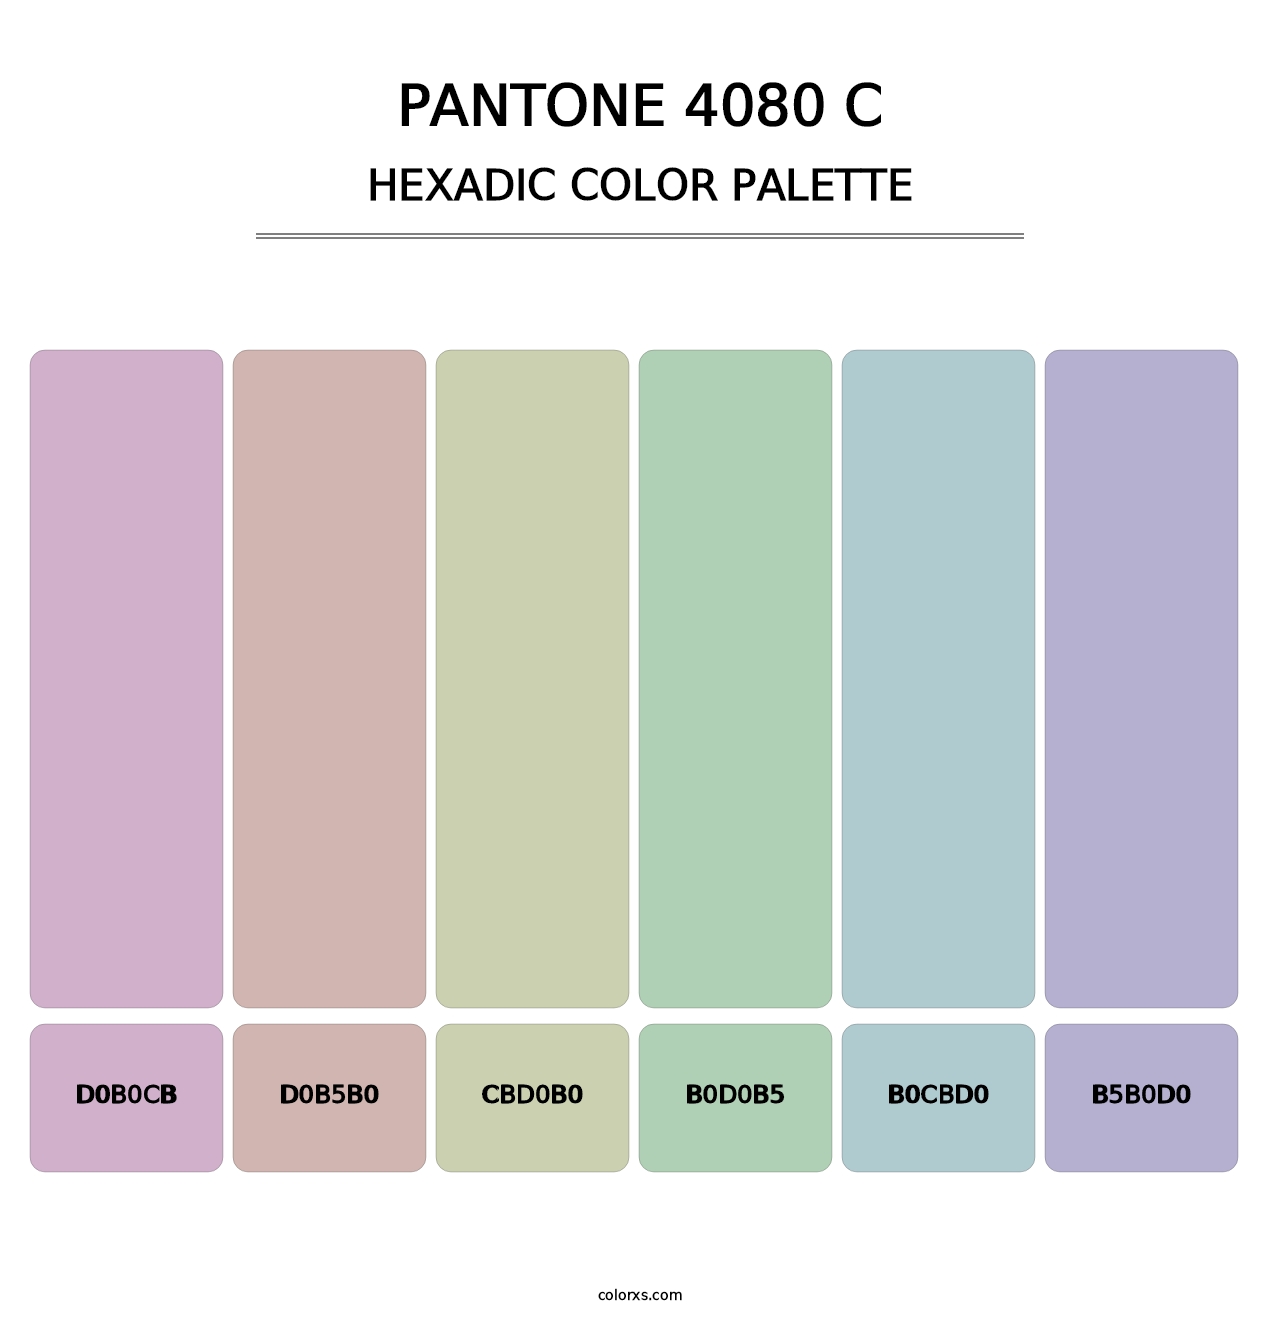 PANTONE 4080 C - Hexadic Color Palette